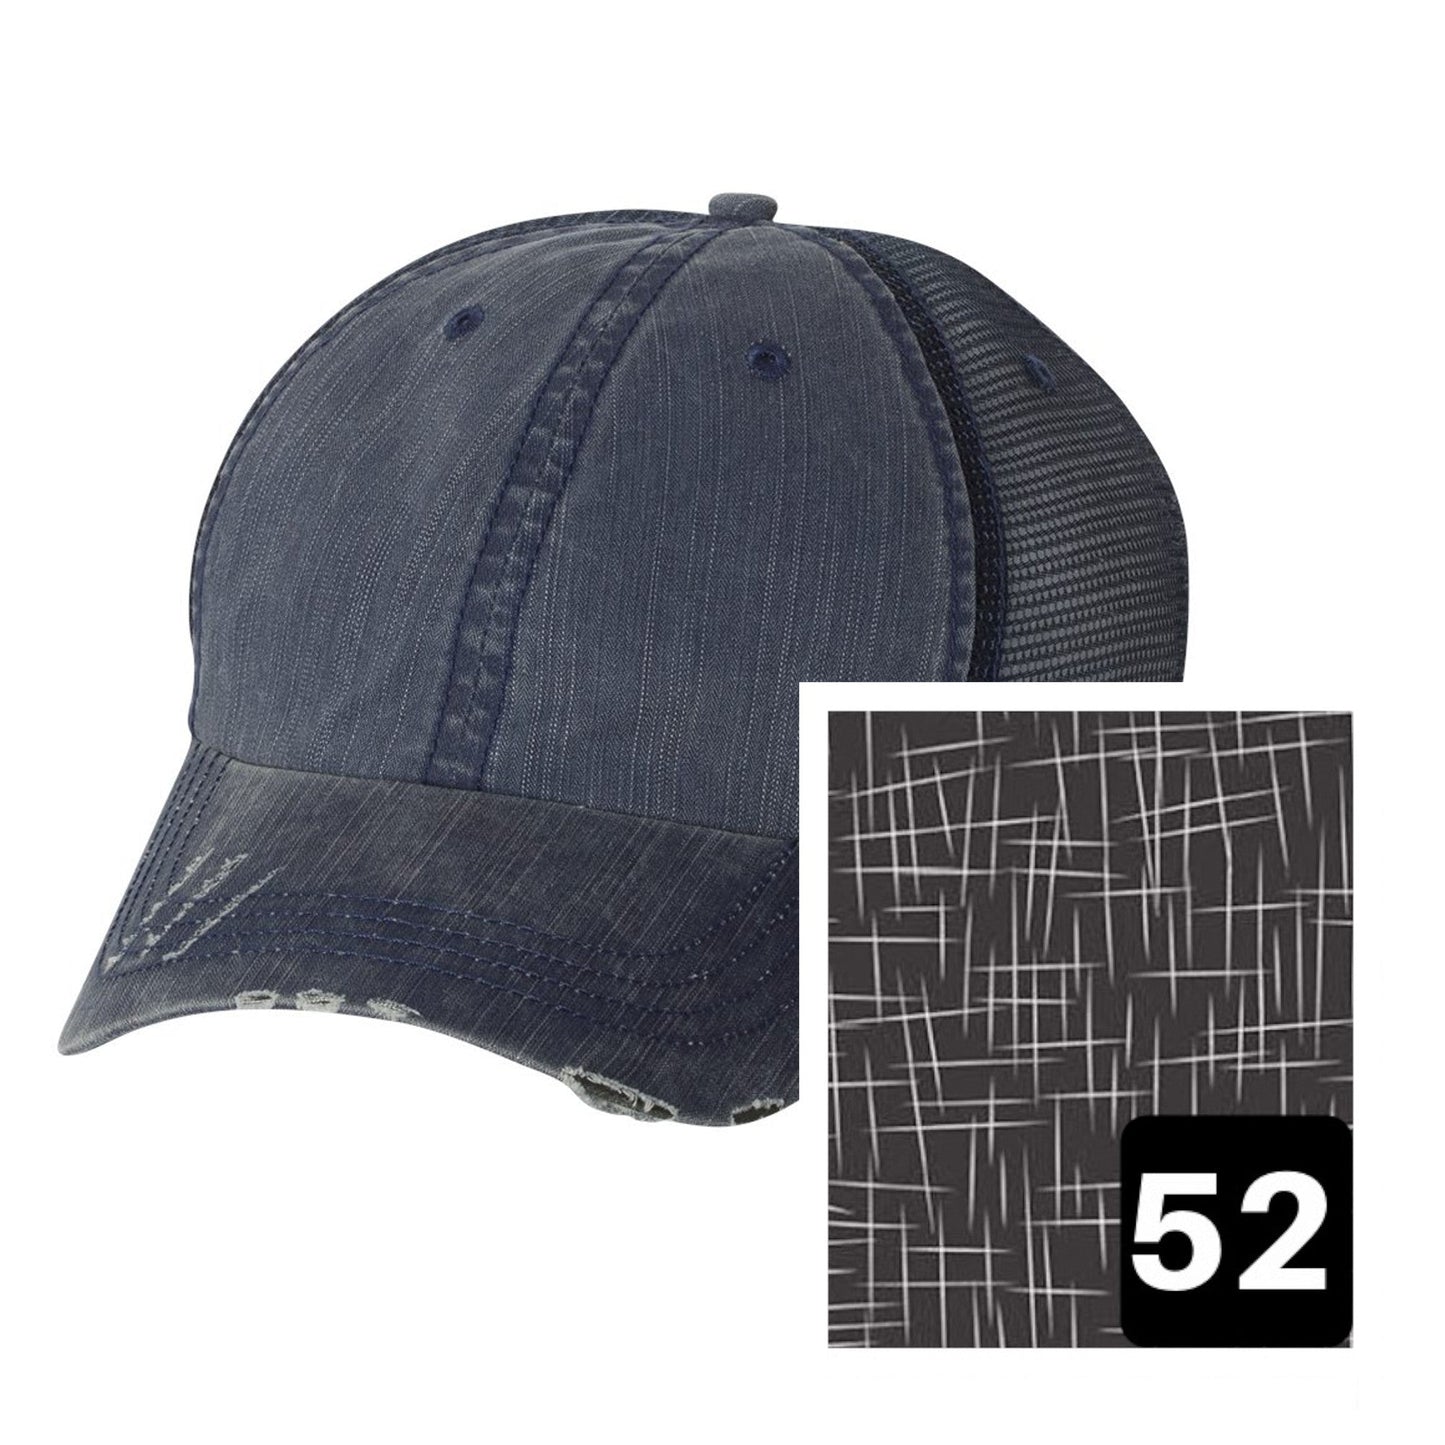 Nebraska Hat | Navy Distressed Trucker Cap | Many Fabric Choices